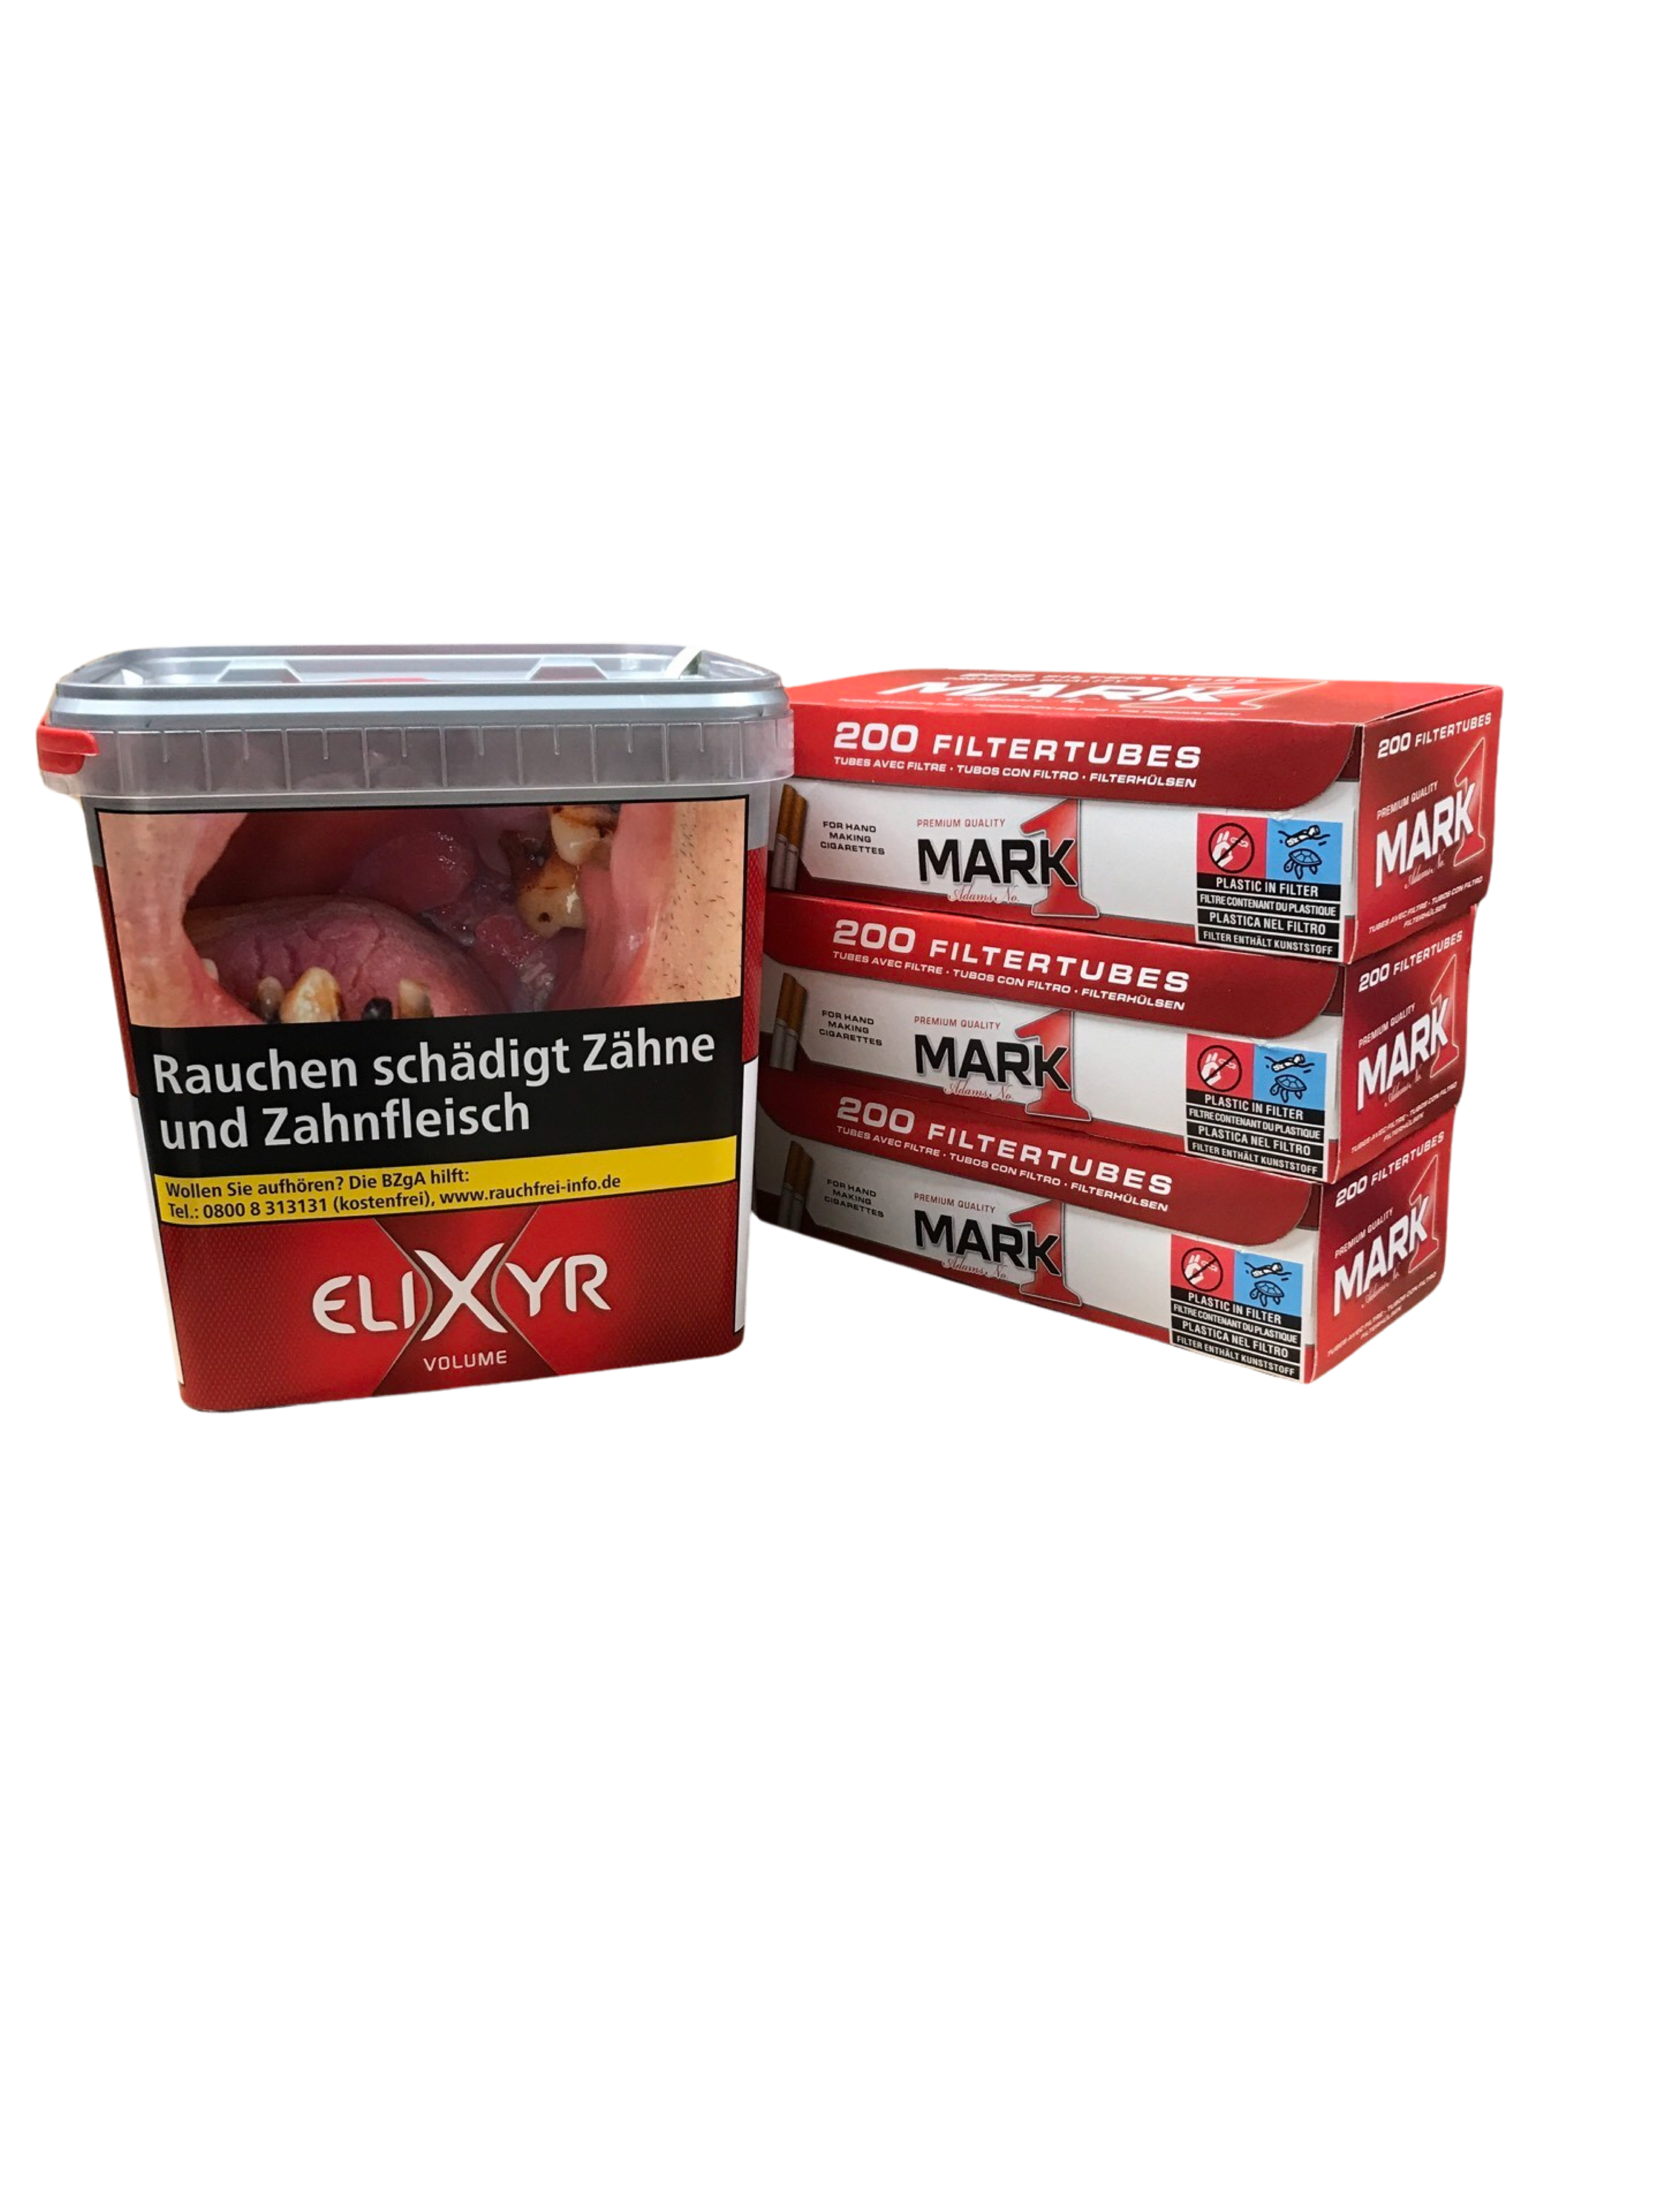 ELIXYR Volume Cigarrette Tobacco 295g + 600 Mark1 Hülsen